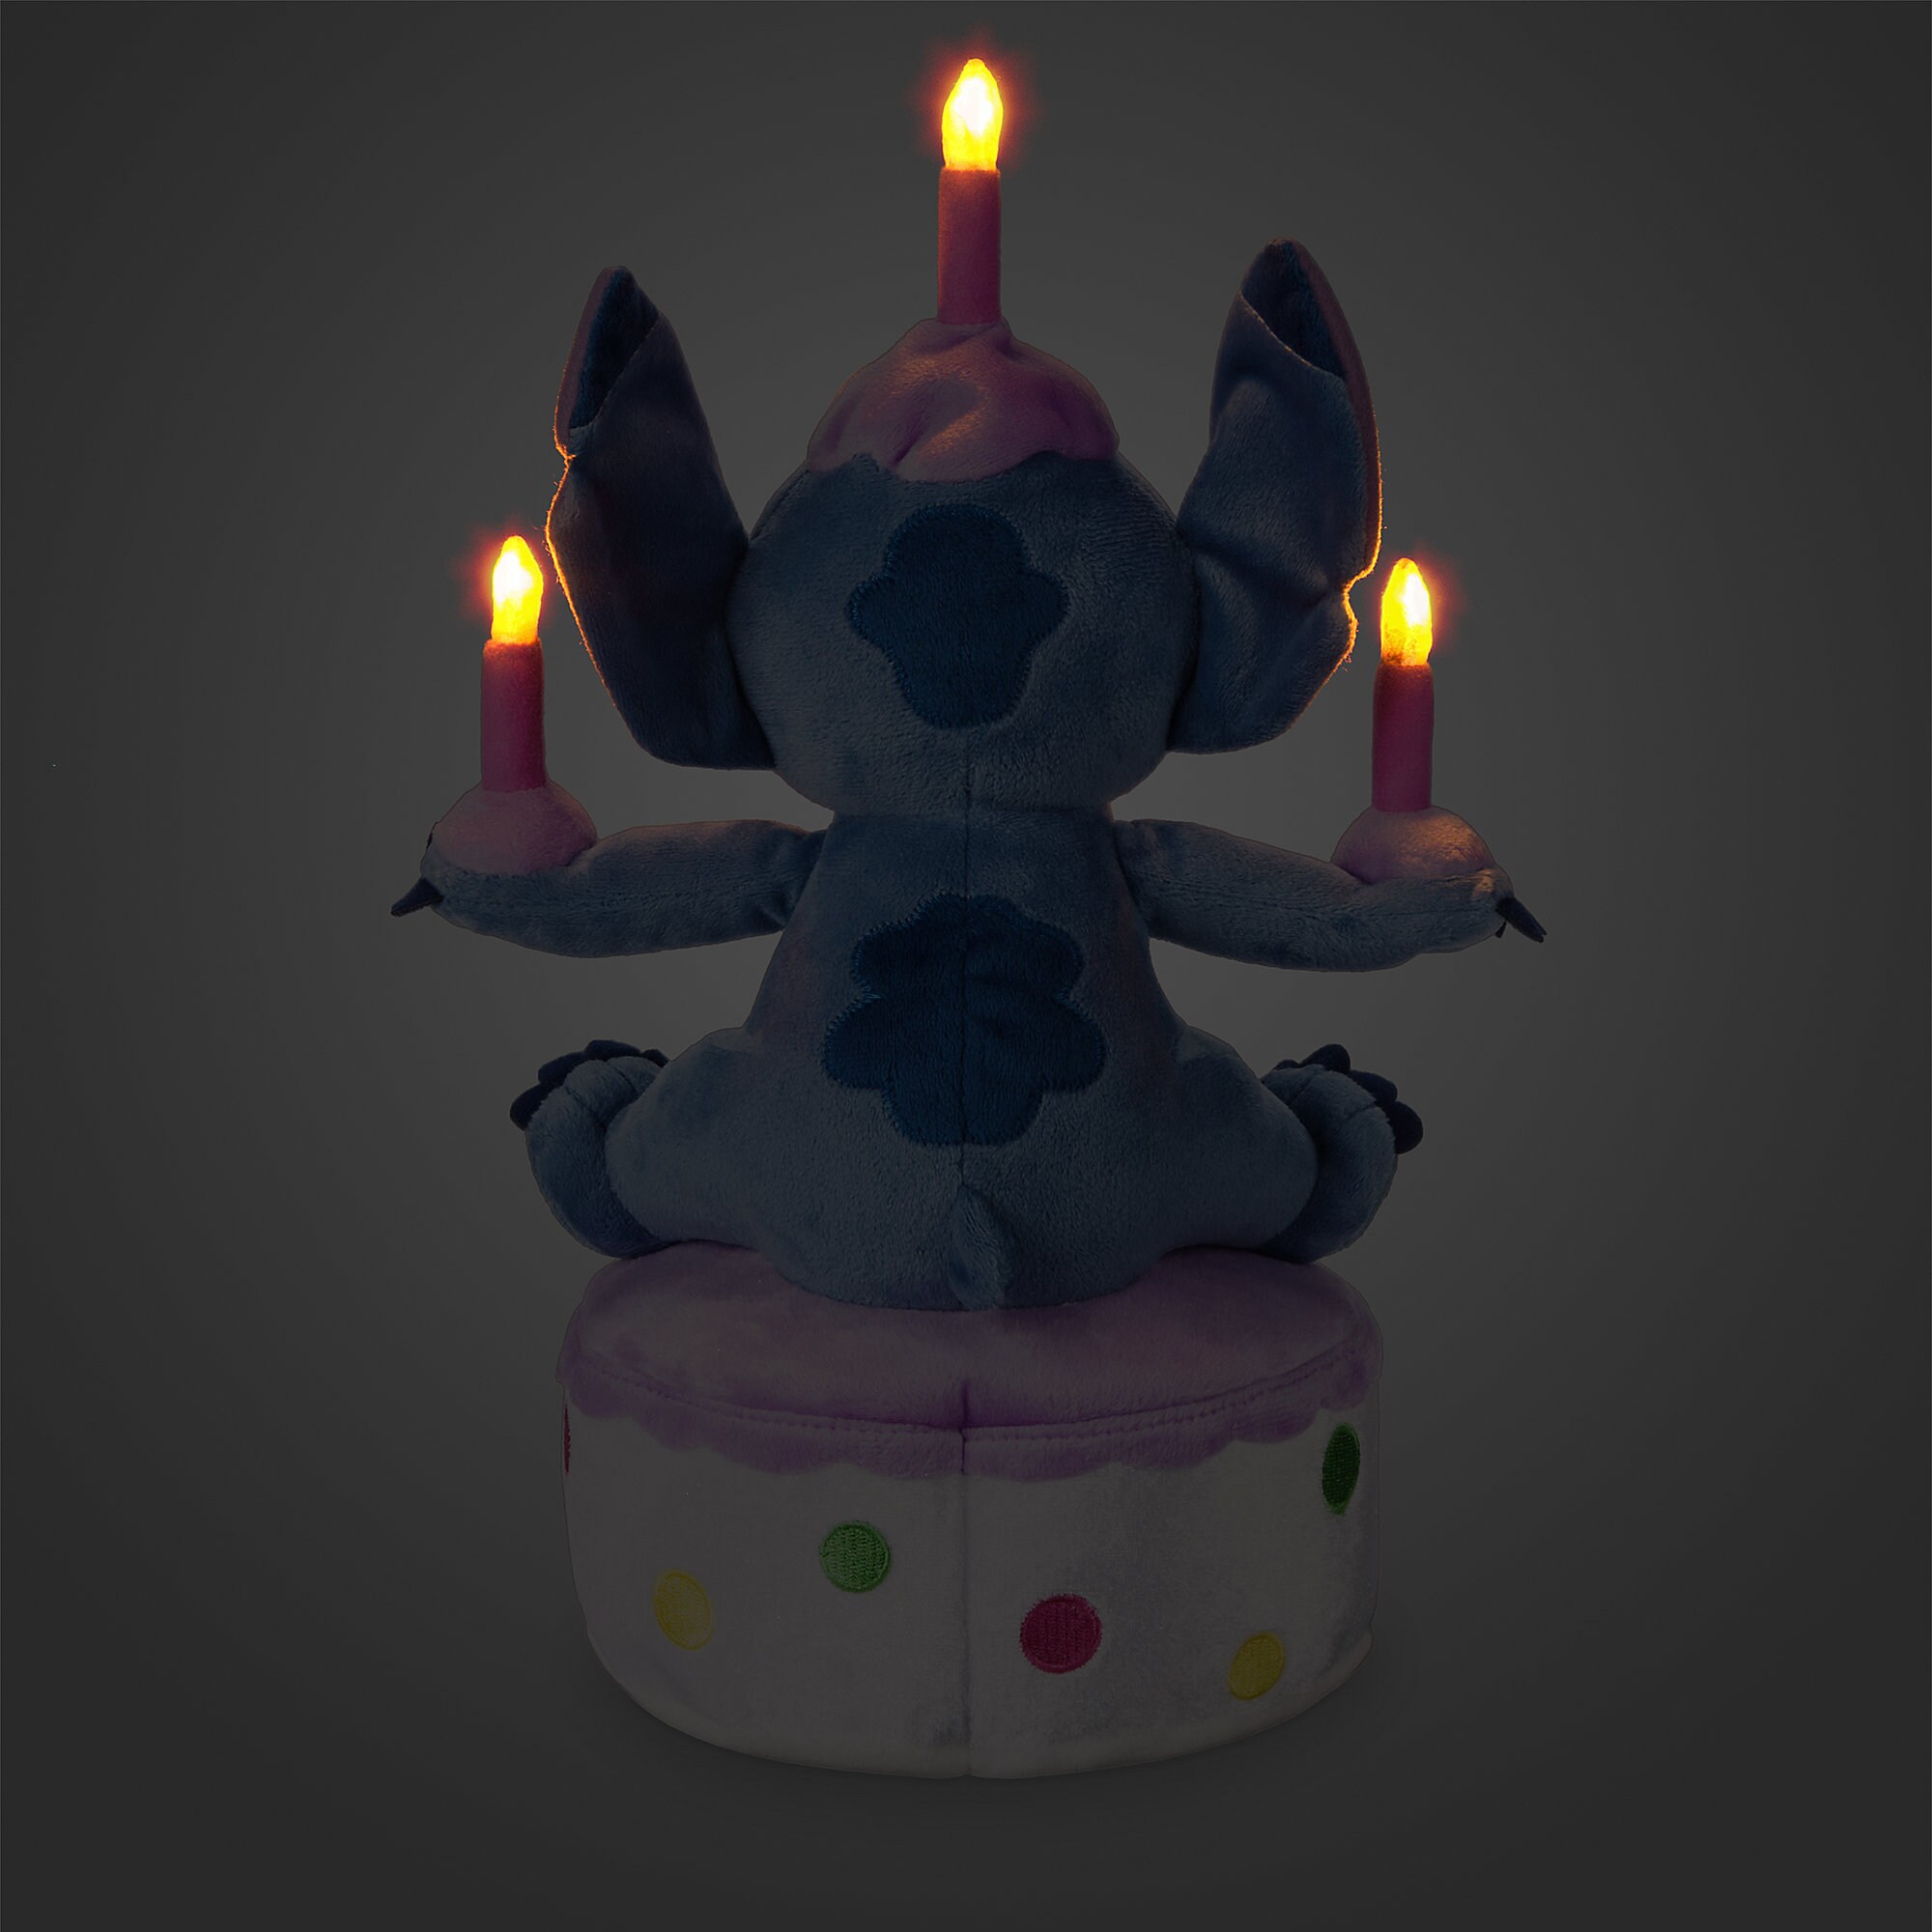 Stitch Birthday Cake Light-Up Plush - Medium